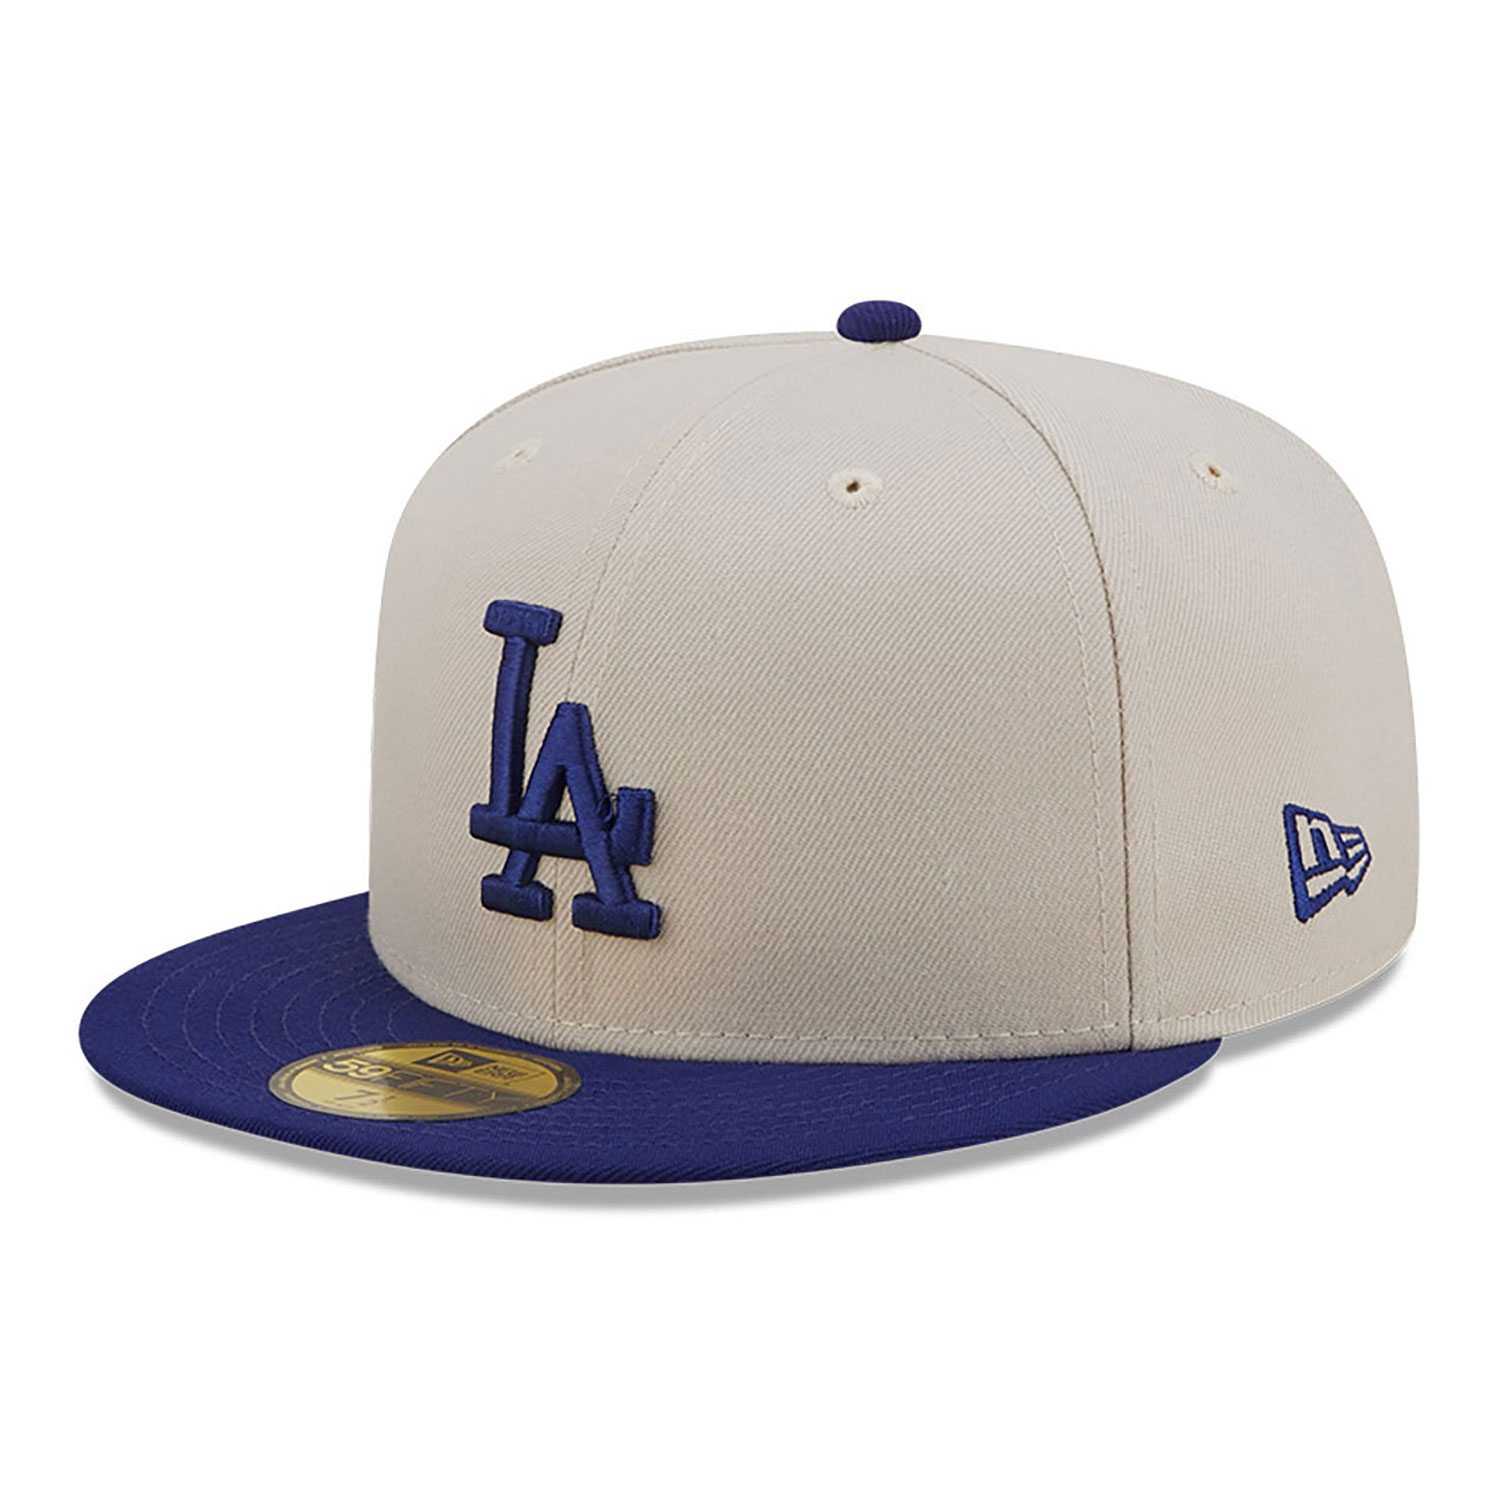 Official New Era LA Dodgers MLB Fall Classic Dark Royal Blue 59FIFTY ...